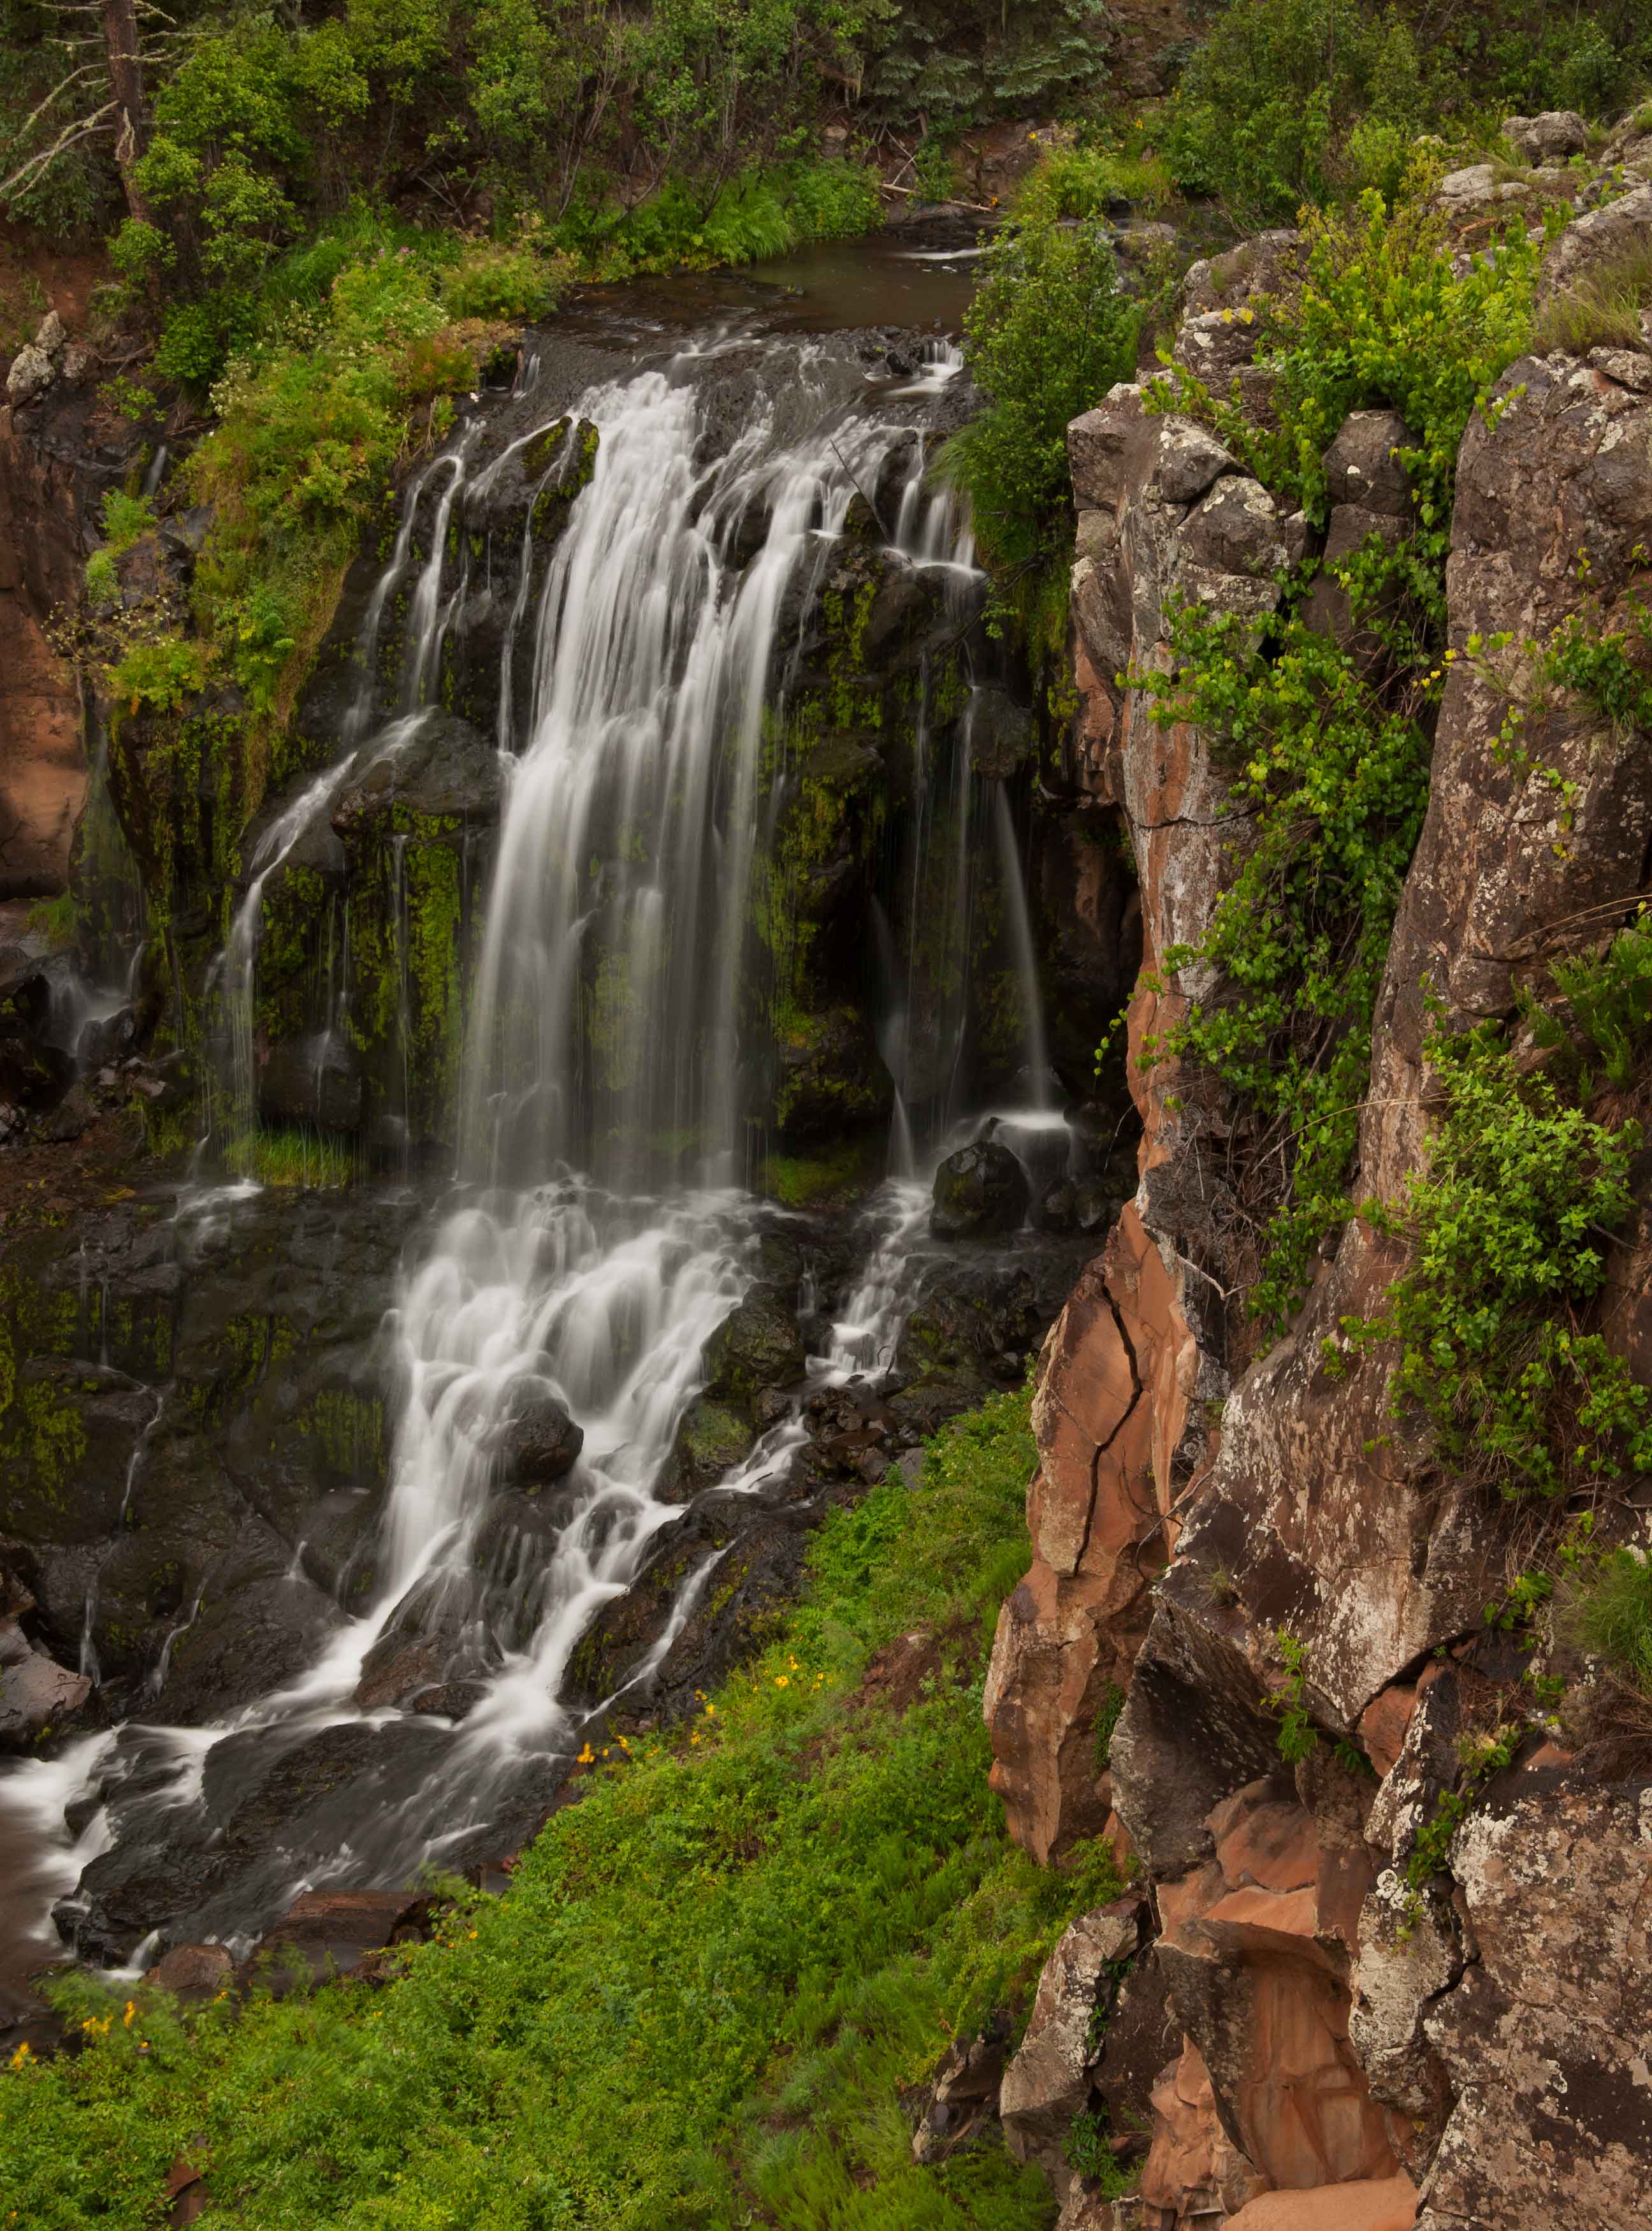 Pacheta Falls on Pacheta Creek in the White Mts. of eastern Arizona